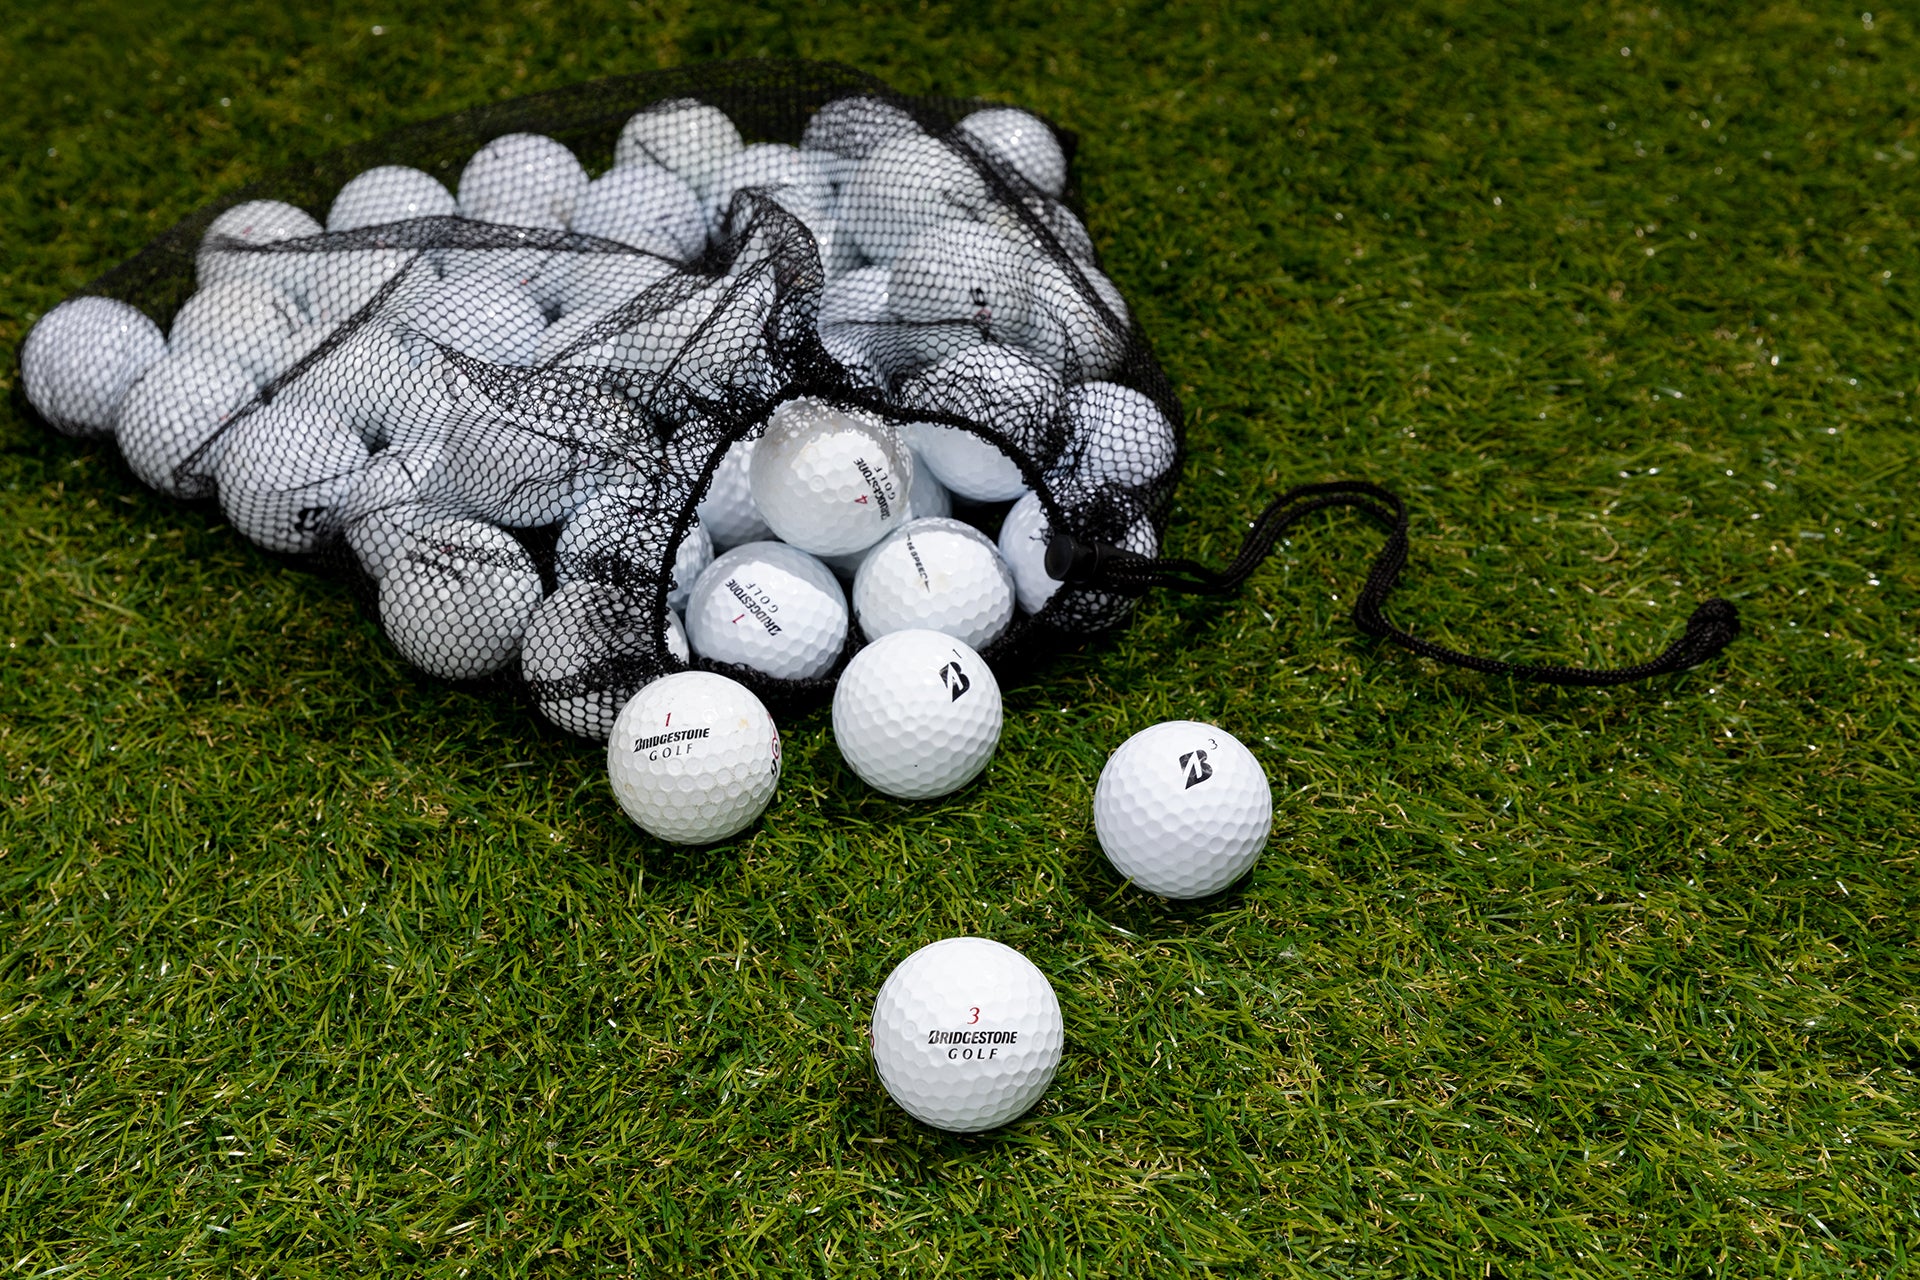 bridgestone e6 golf balls on green grass